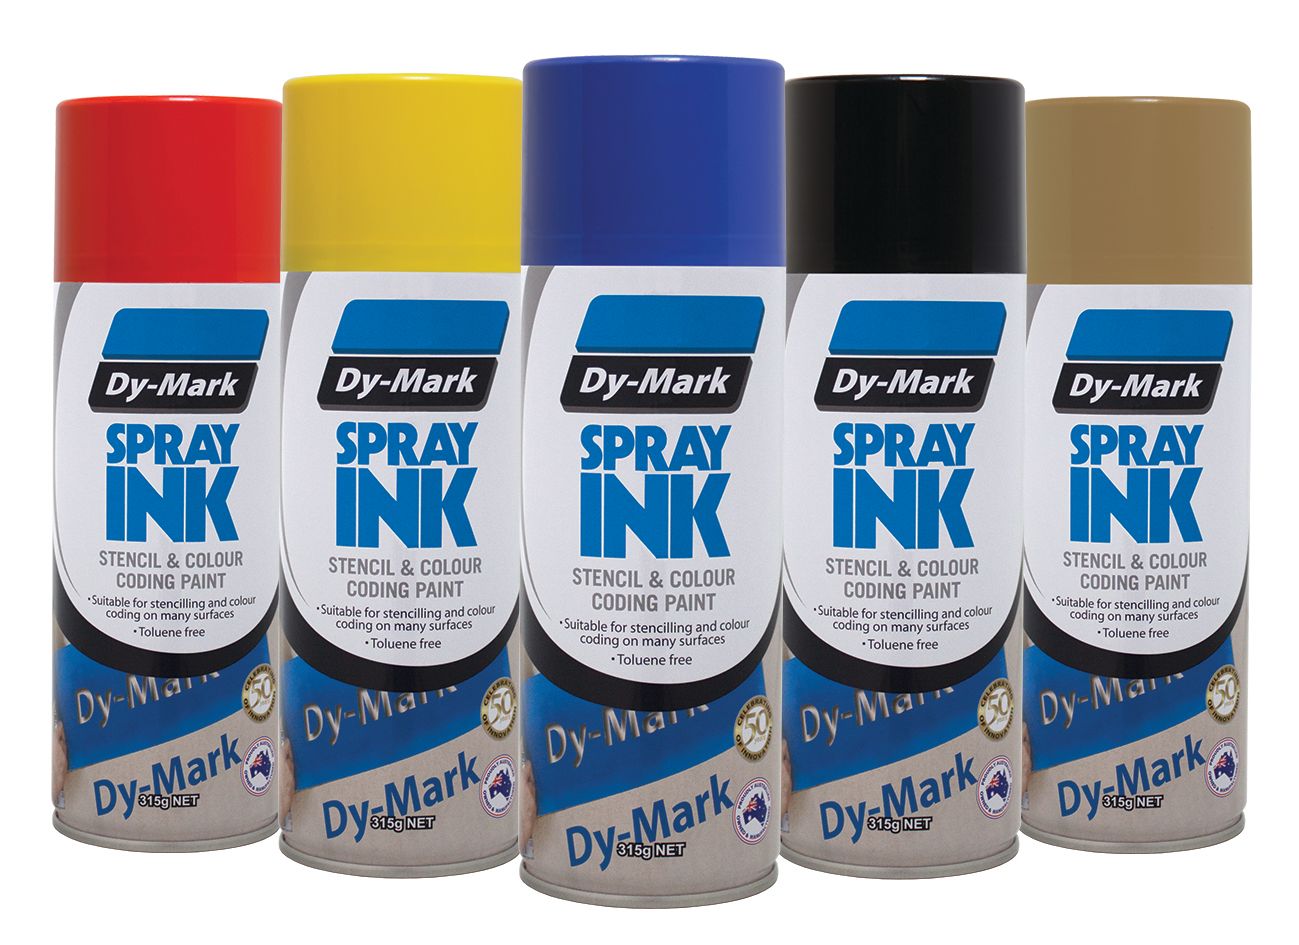 dymark stencil coding spray paint